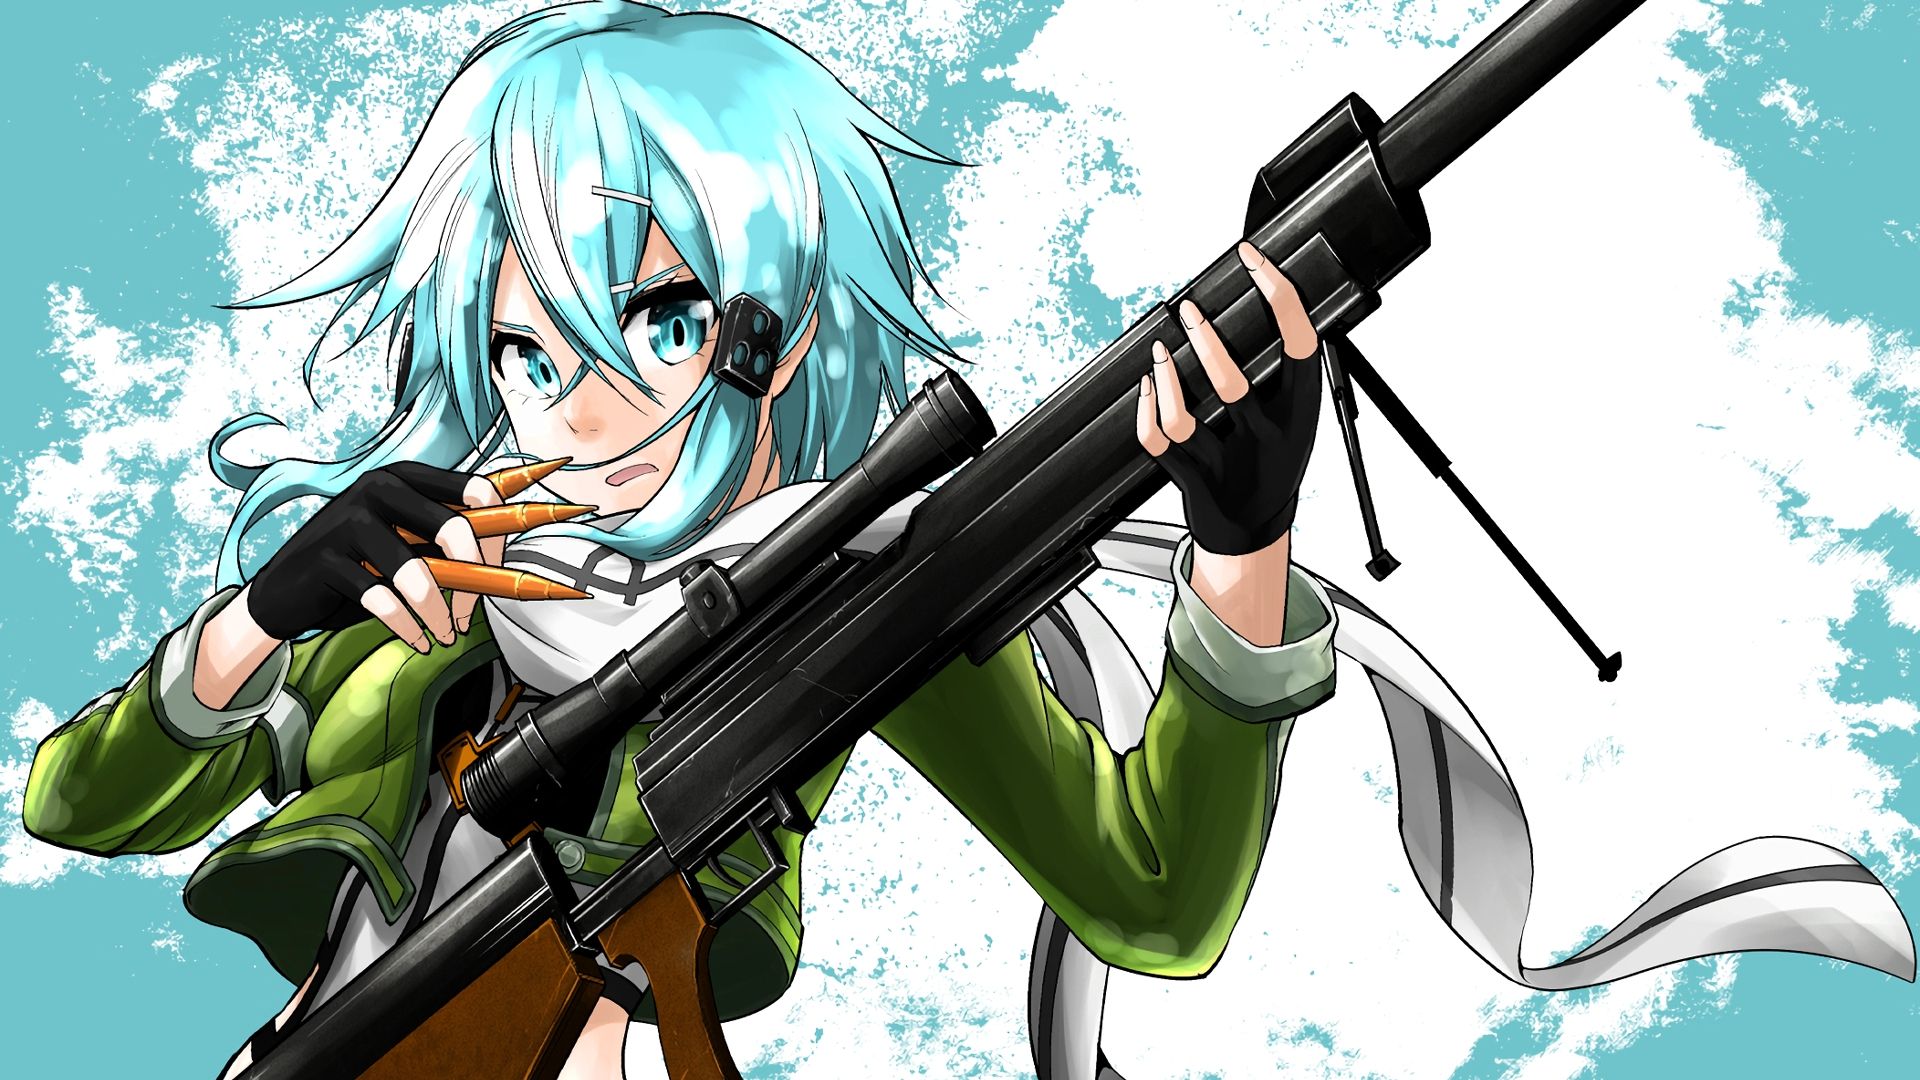 Desktop Wallpaper Asada Shino, Sinon With Gun Anime, HD Image, Picture, Background, Kysjqb